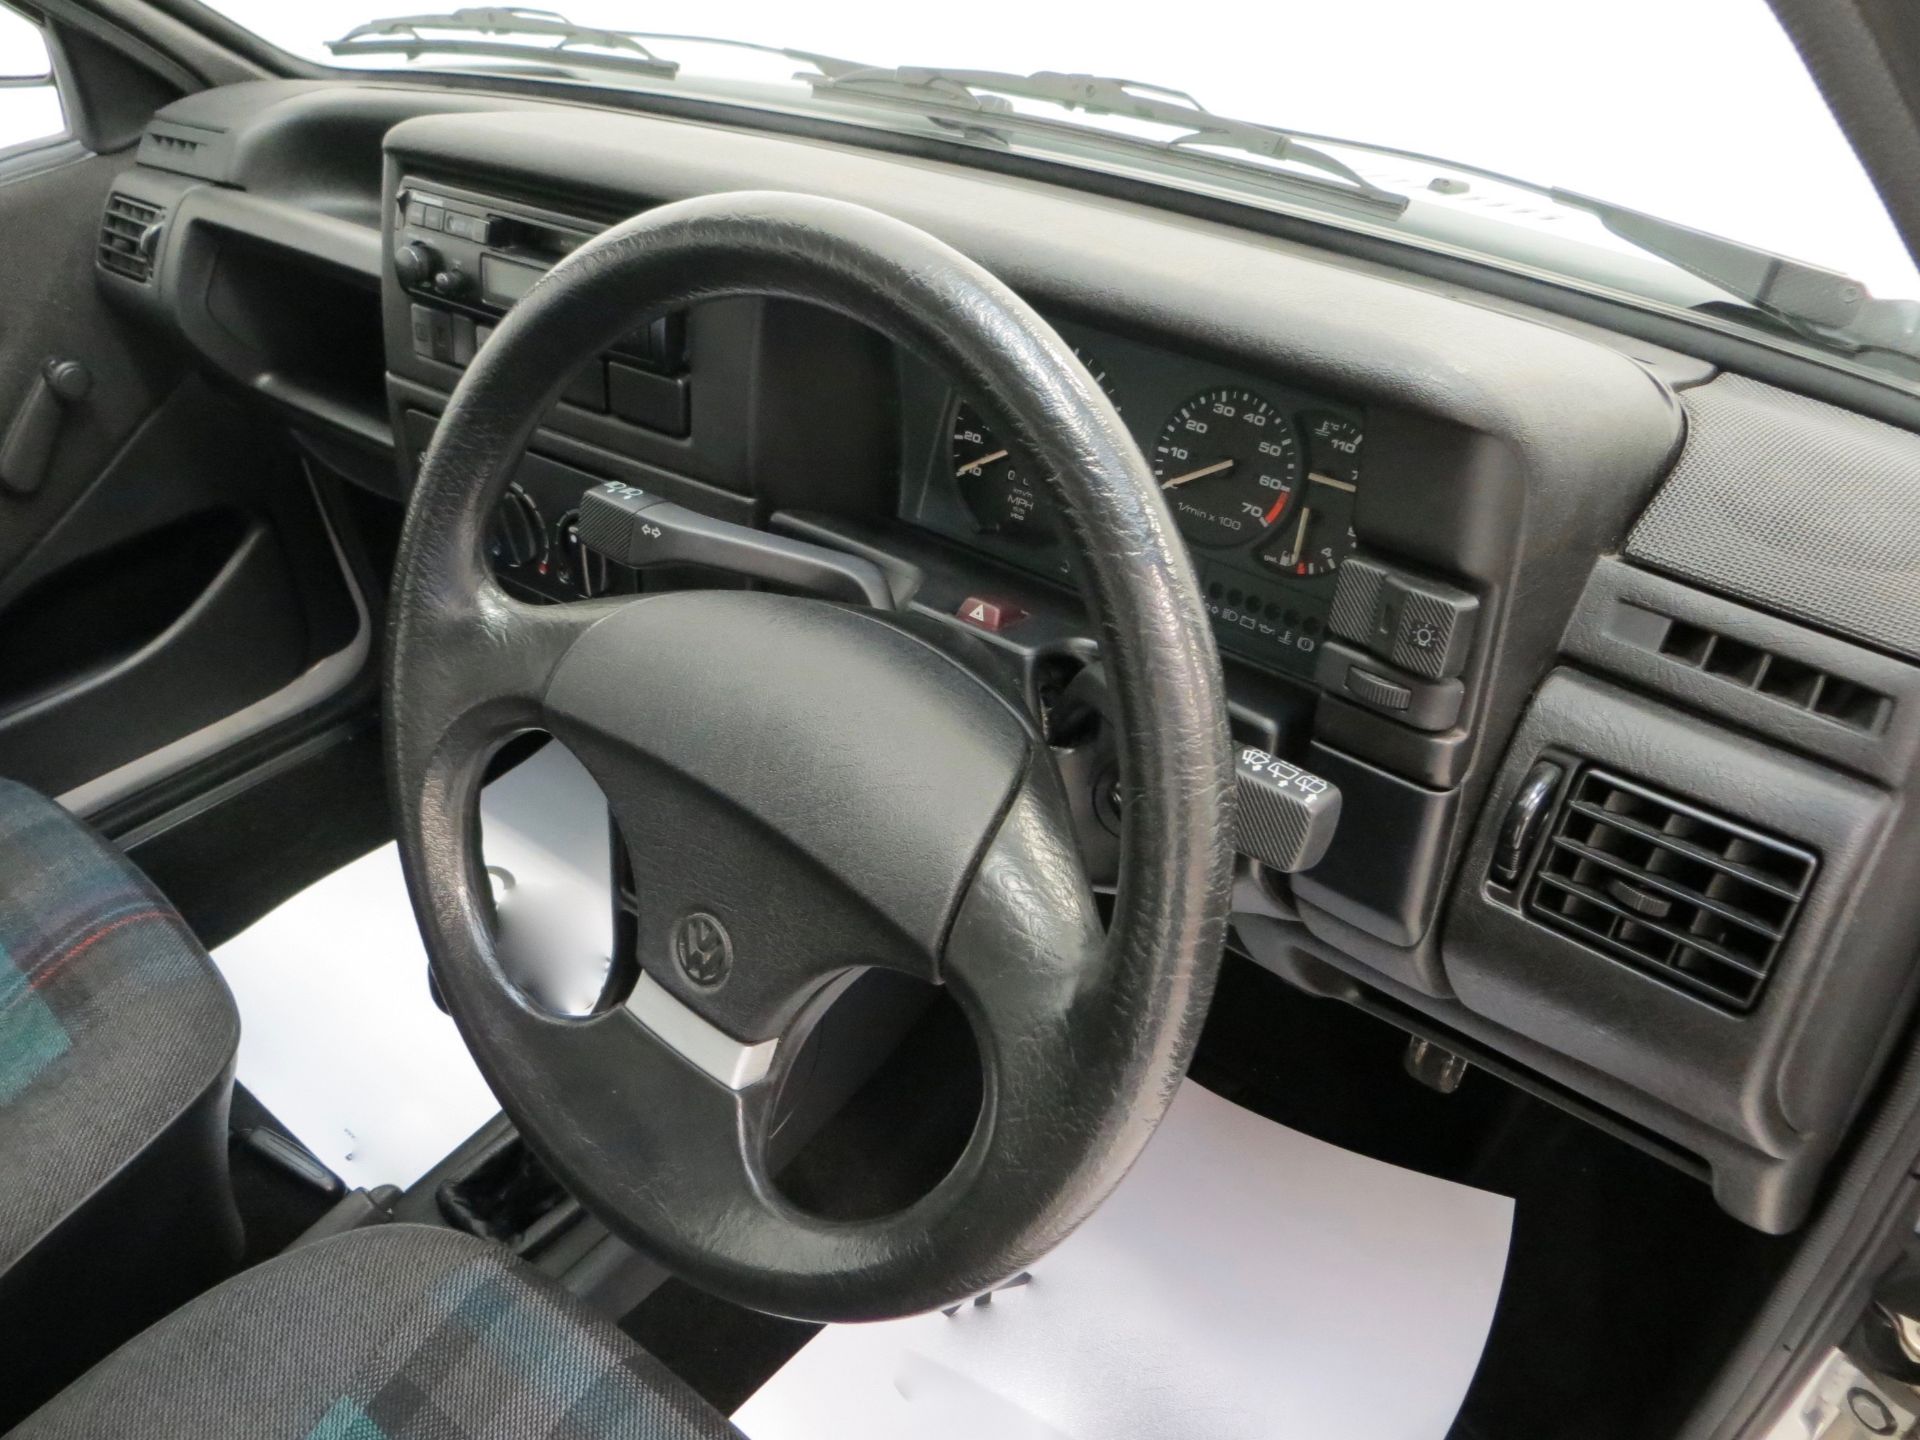 1992 Volkswagen Polo Mk2F Genesis - Image 5 of 86